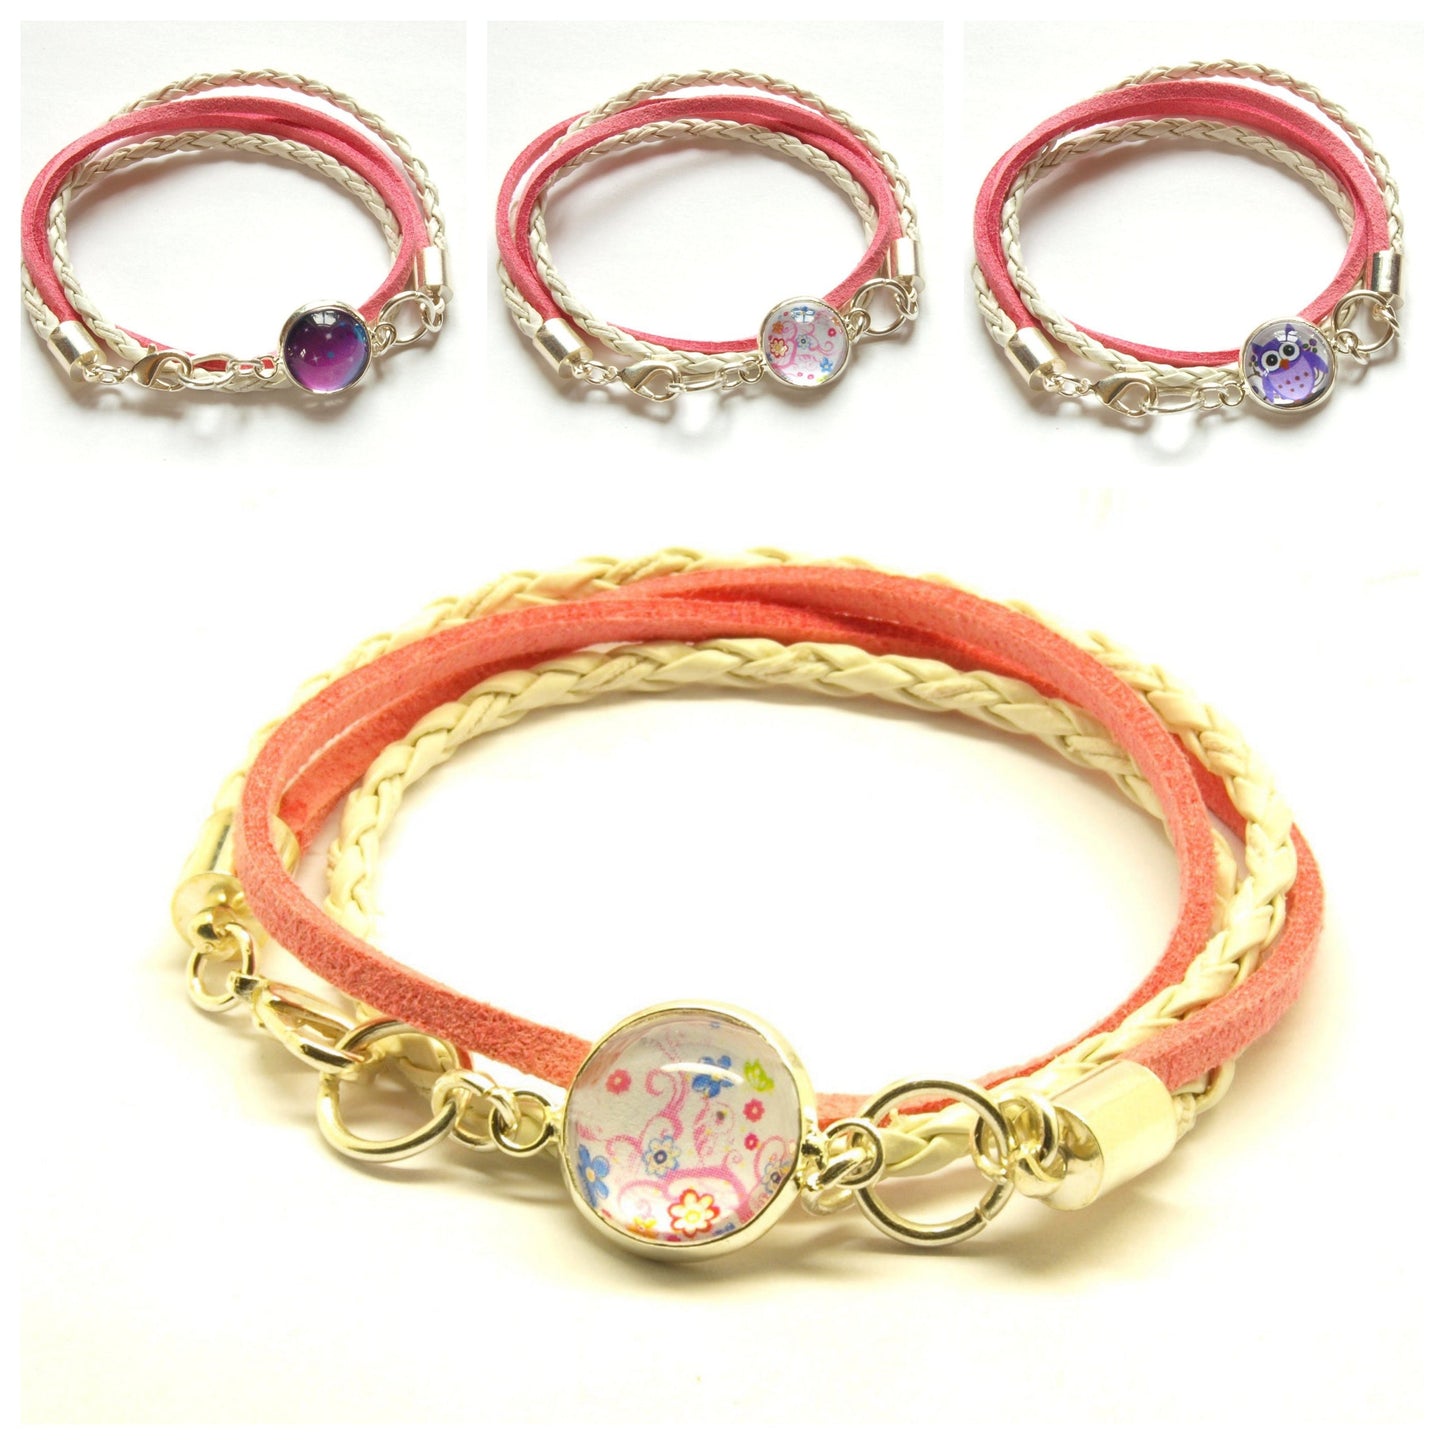 Wickelarmband nach Wahl Leder Cabochon Retro rosa weiß Armband Armreifen bunt Blüten Muster silbern bronze golden